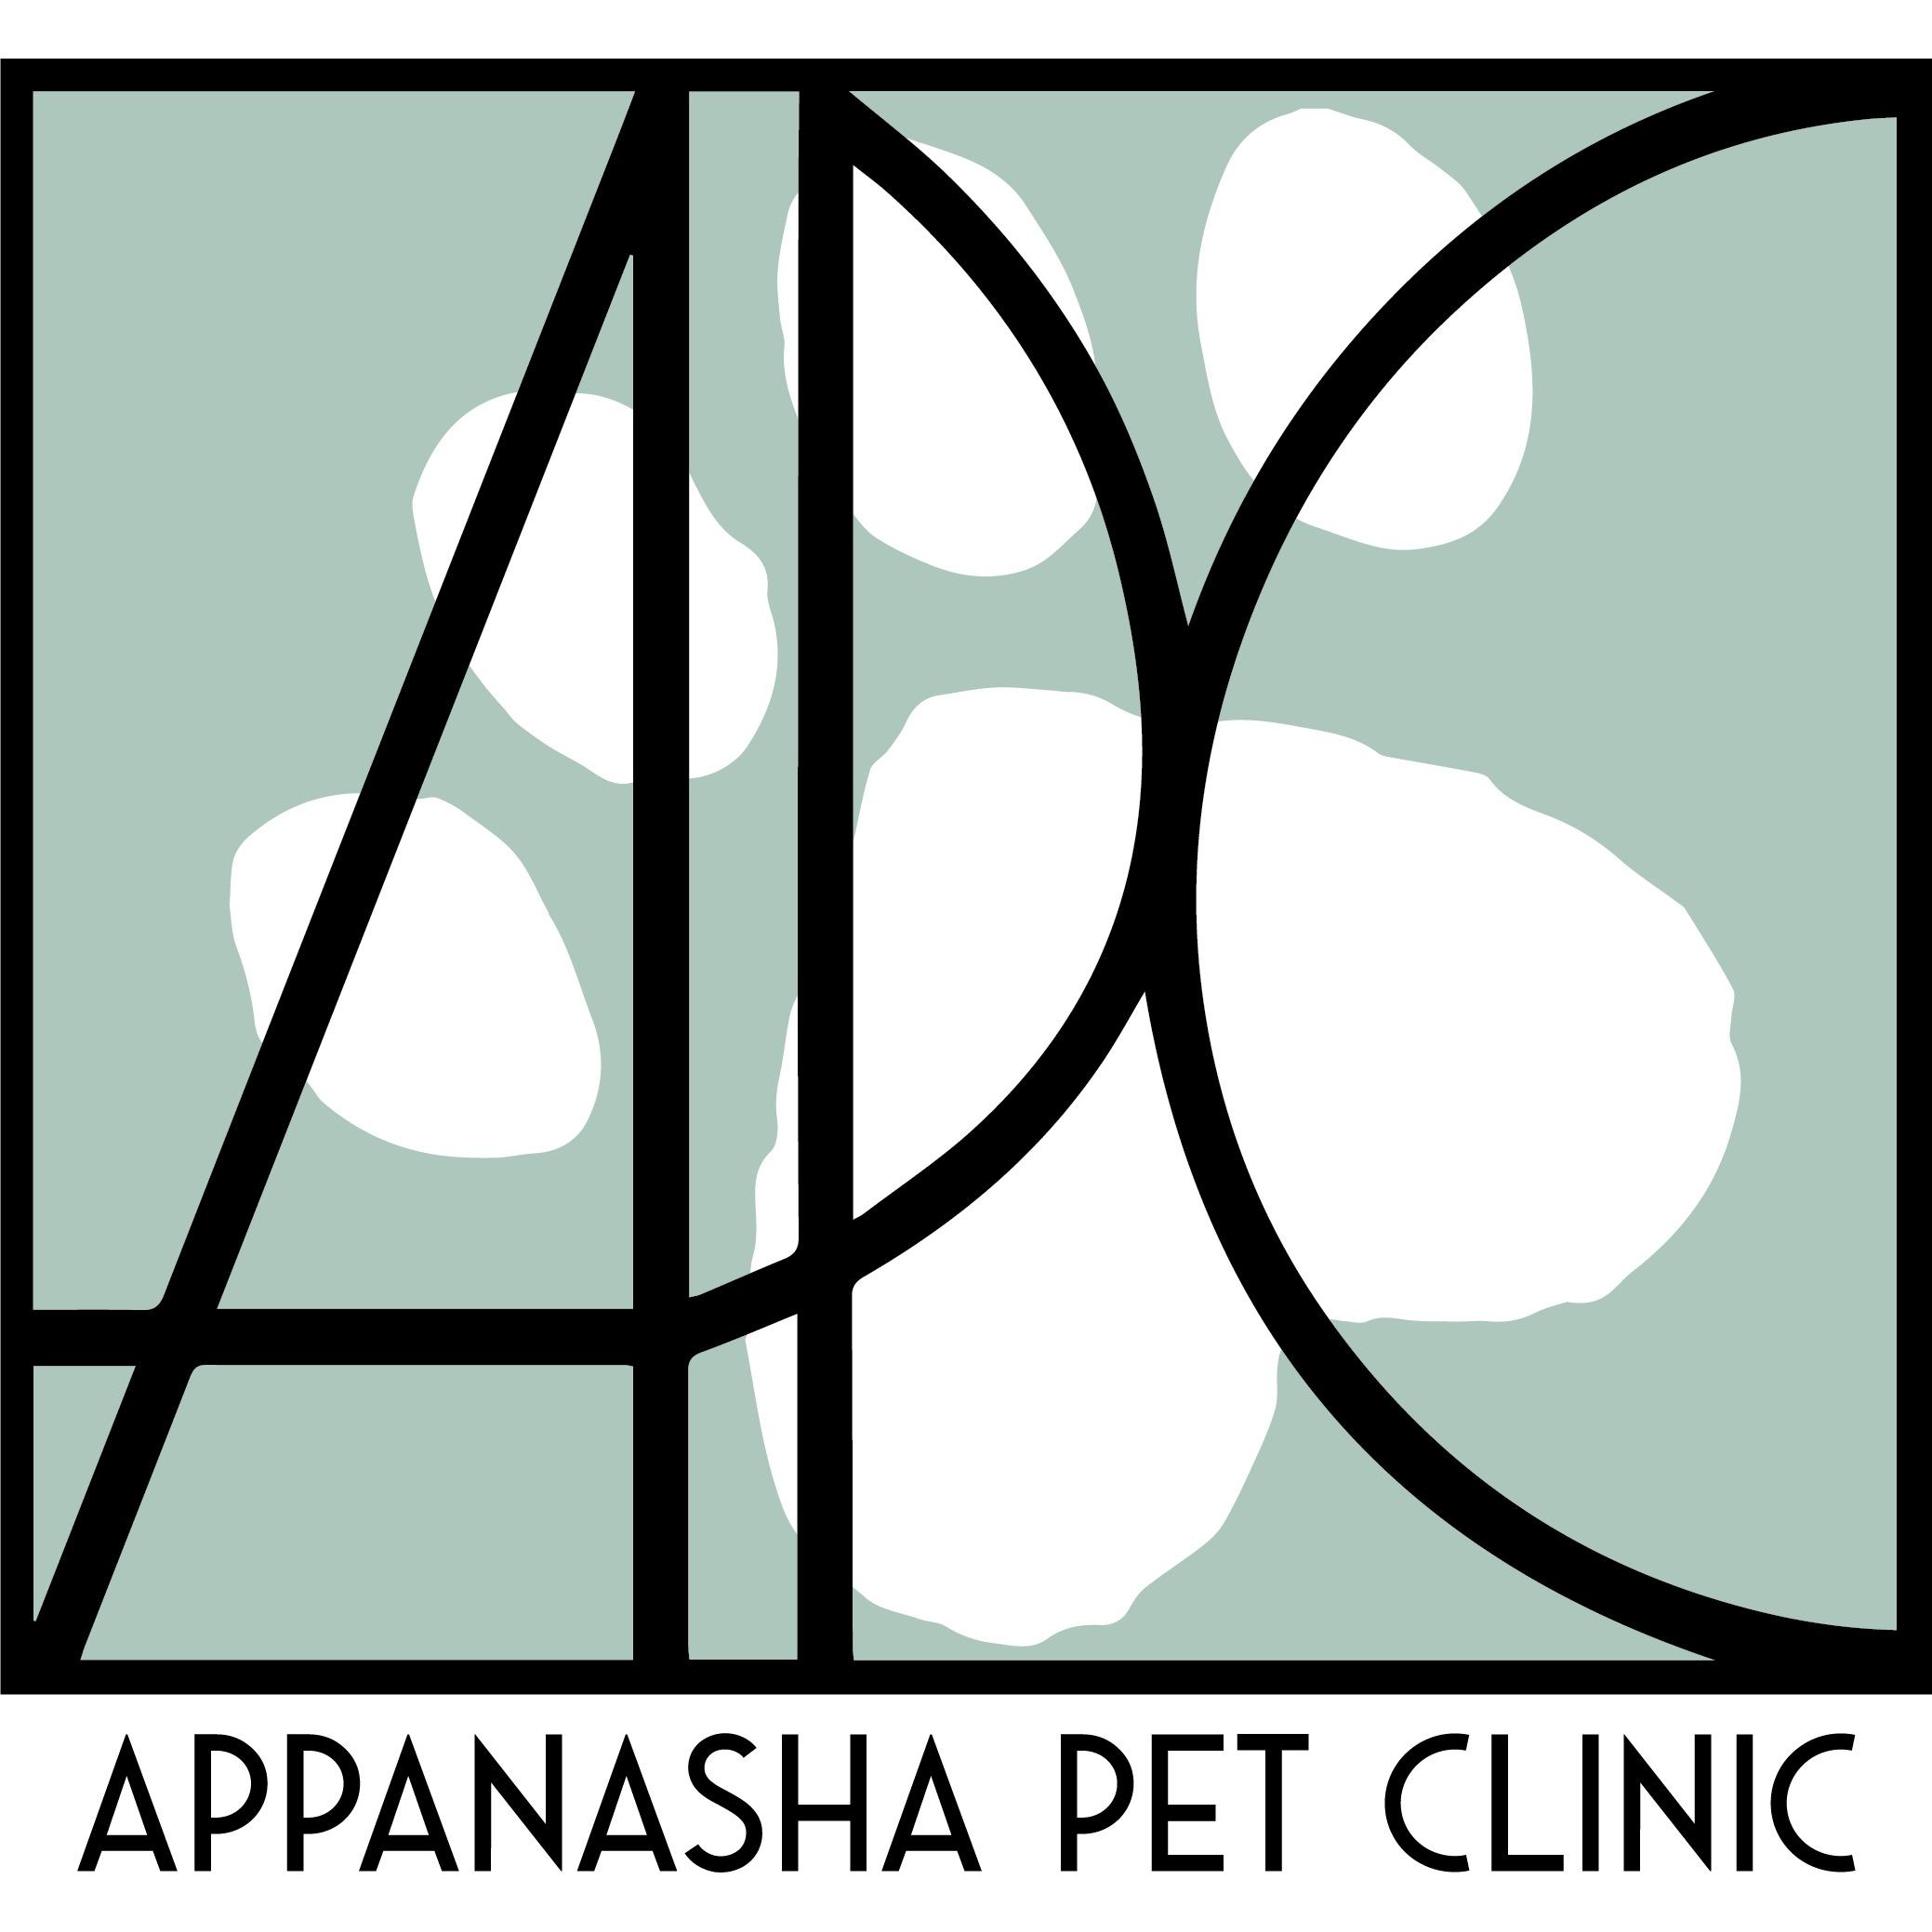 Appanasha Pet Clinic